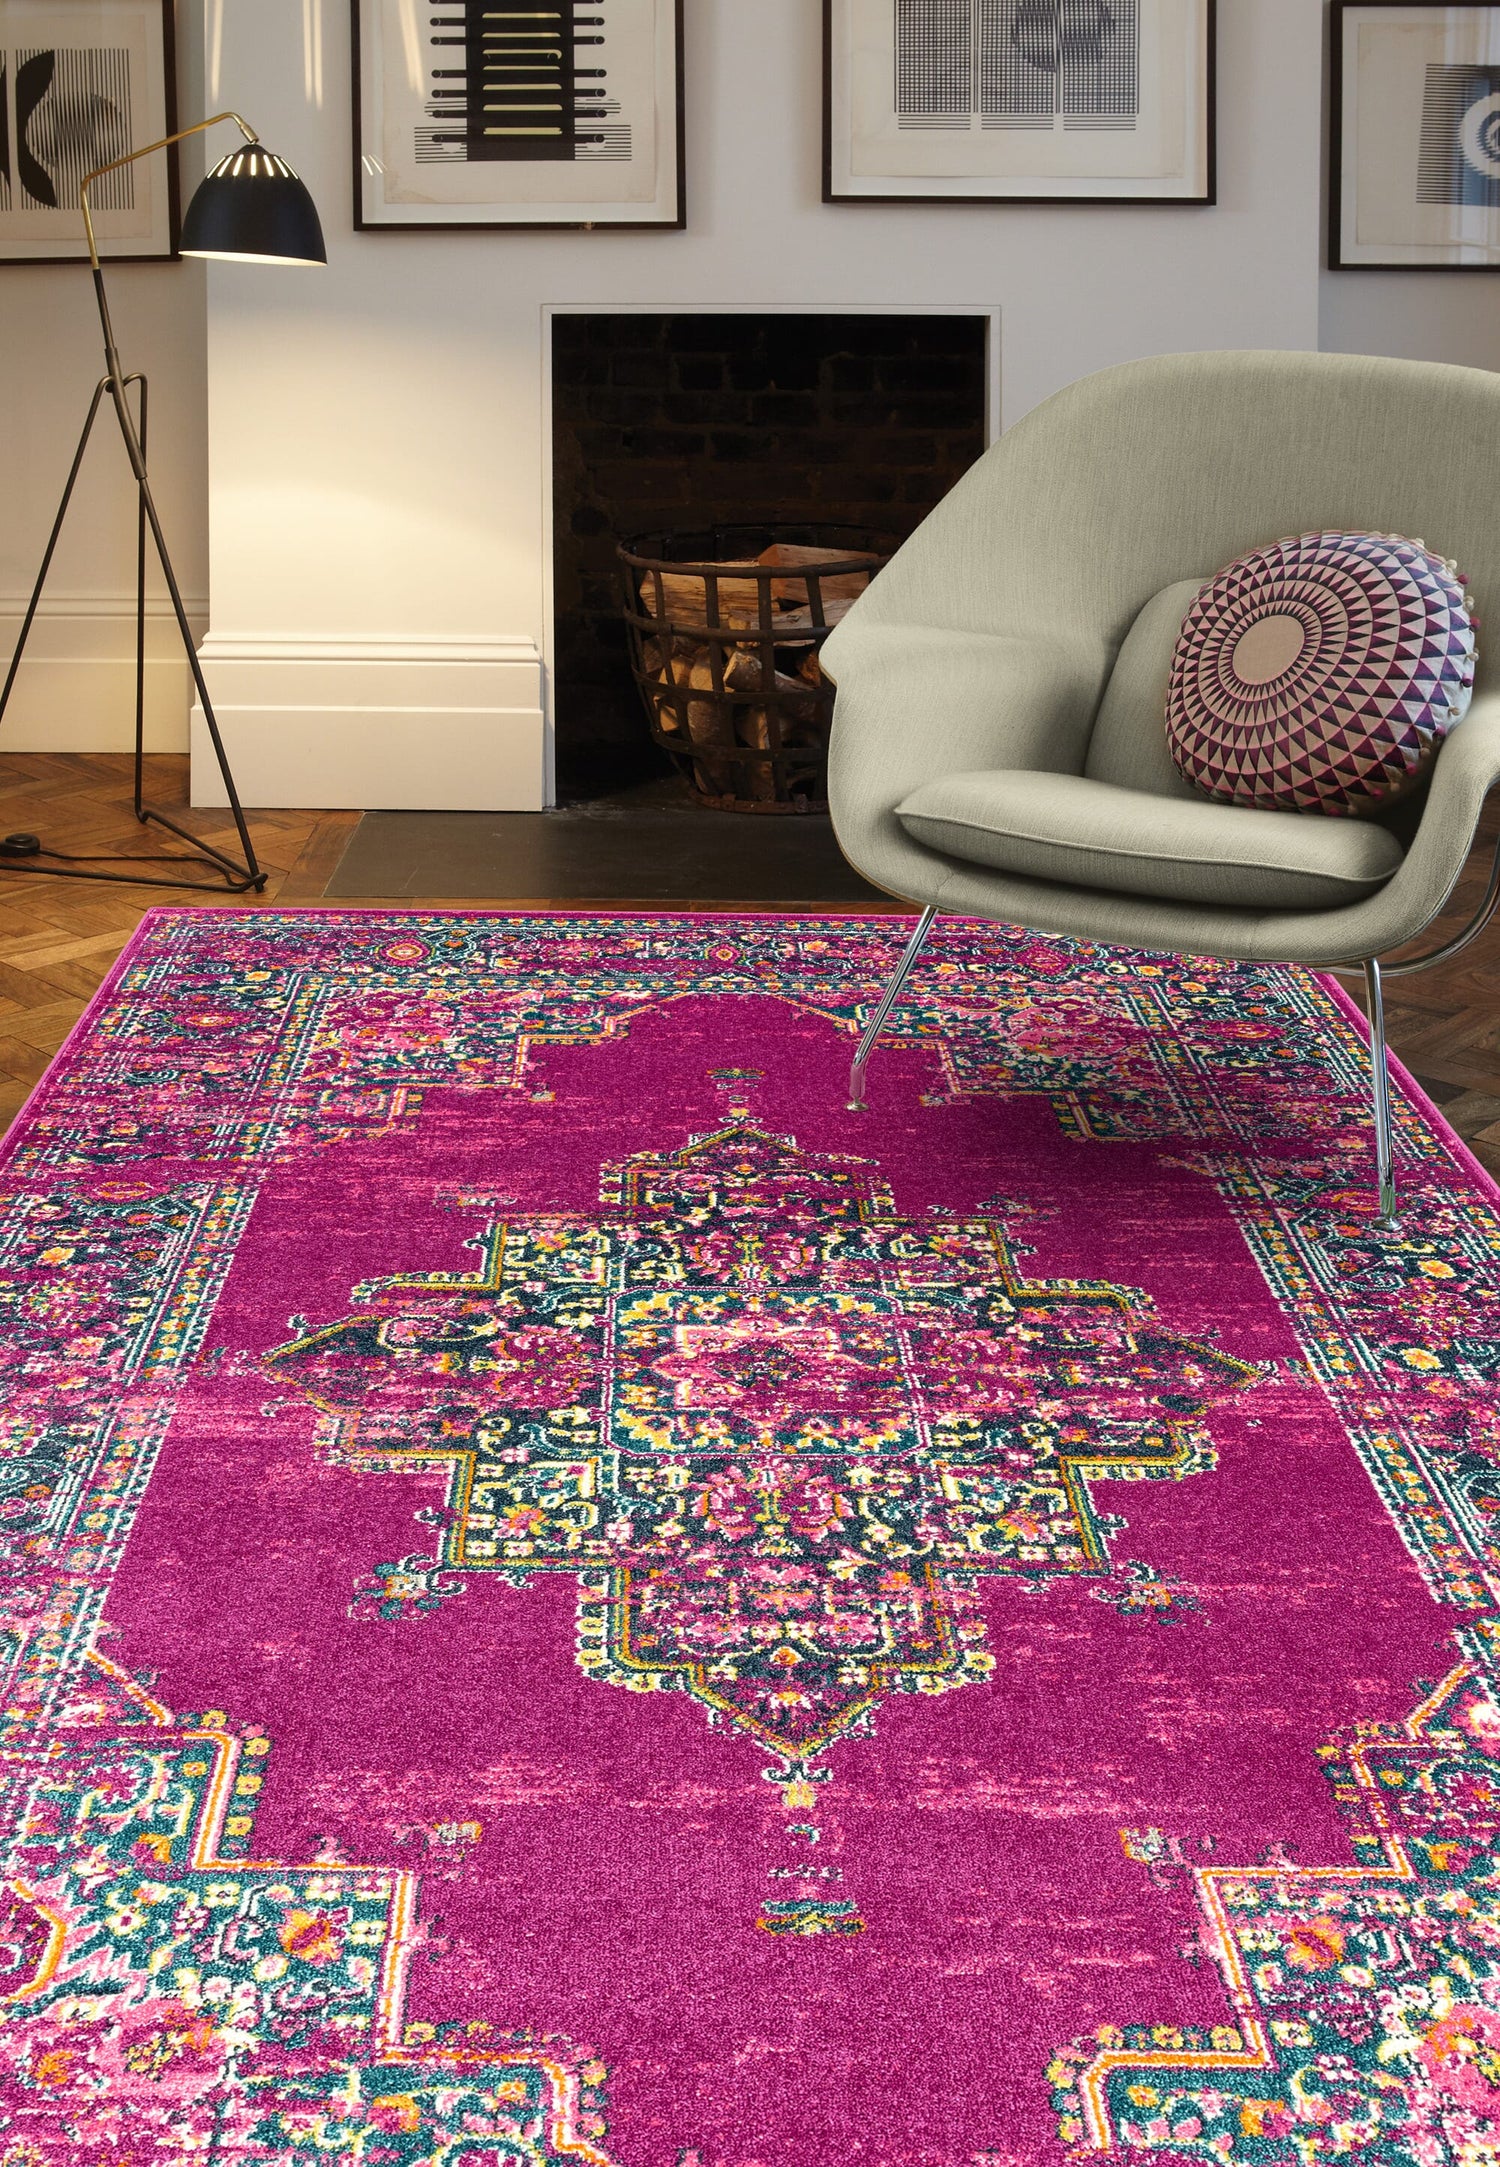  Asiatic Carpets-Asiatic Carpets Colt Machine Woven Rug Medallion Fuchsia - 120 x 170cm-Multicoloured 805 